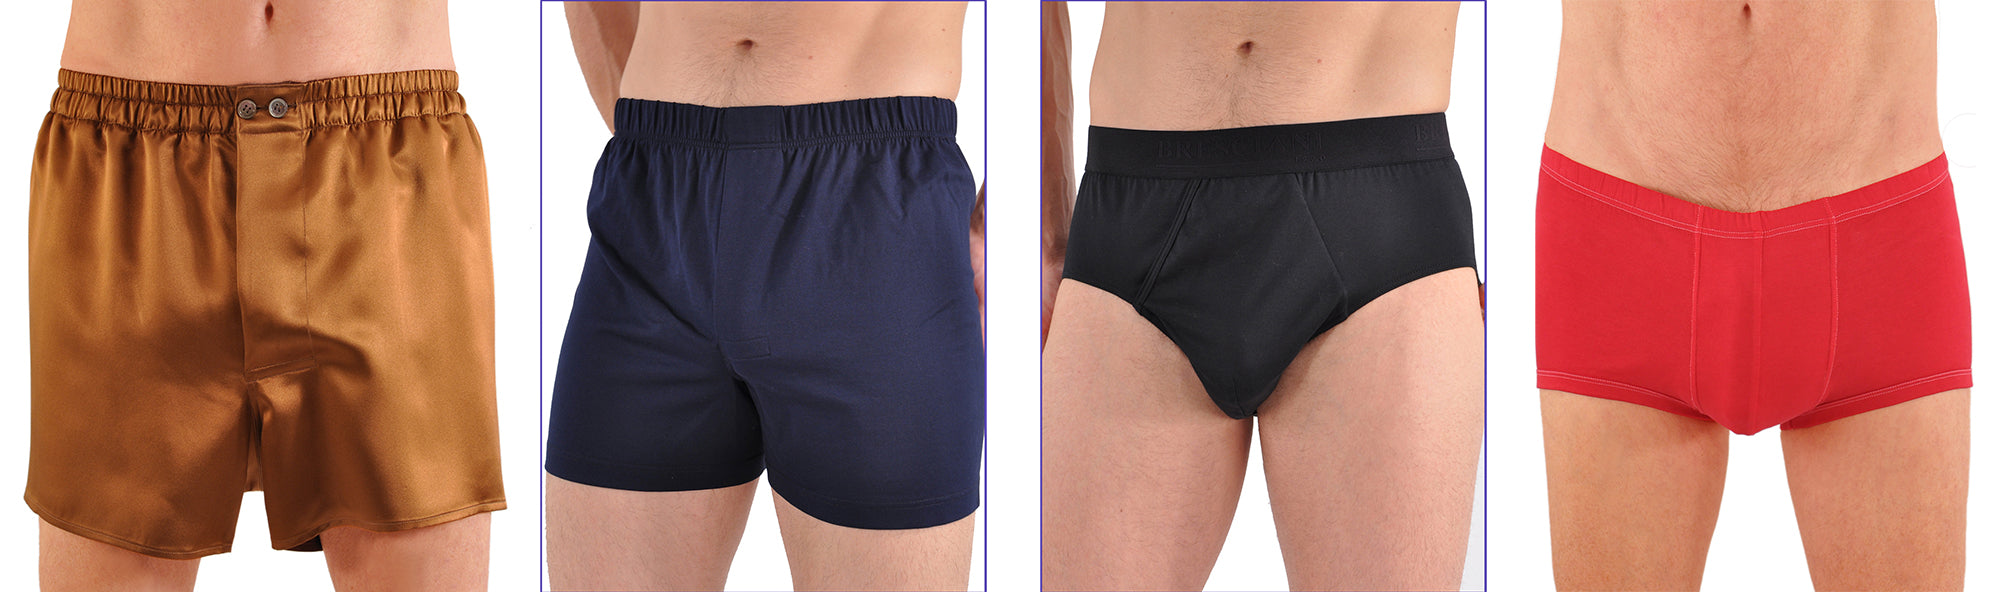 Are bikini briefs (men's briefs not woman's) good underwear for 15